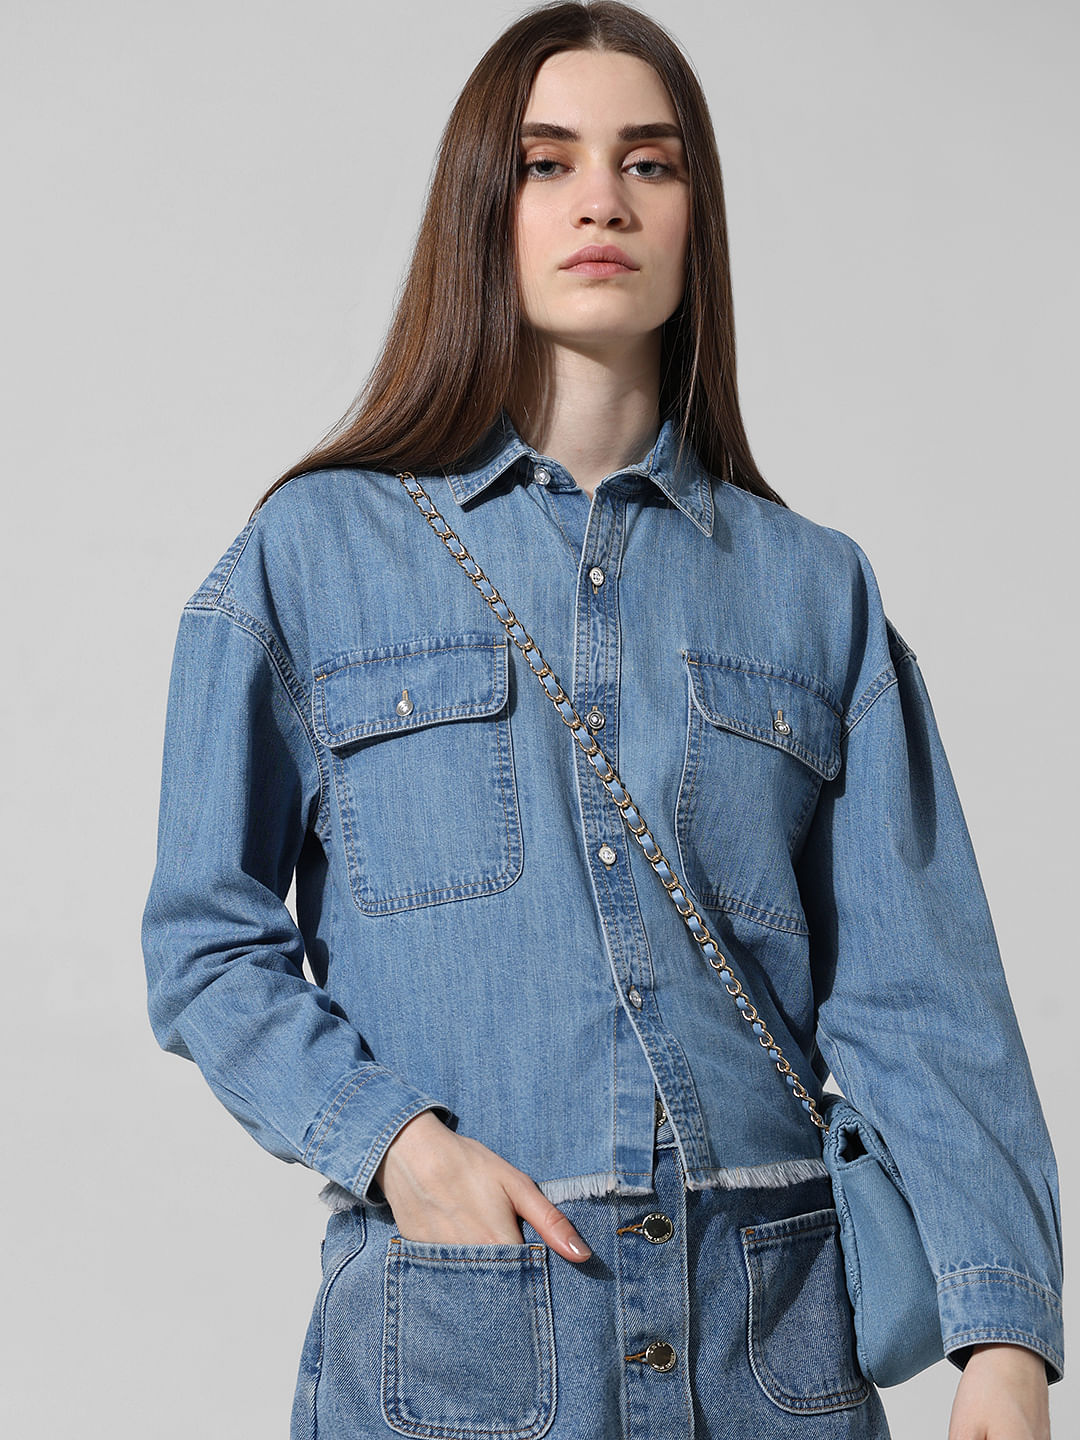 Long Sleeve Denim Shirt Women Button Down Chambray Shirt Casual Snap Jean  Shirts Blouse Top A-Blue at Amazon Women's Clothing store